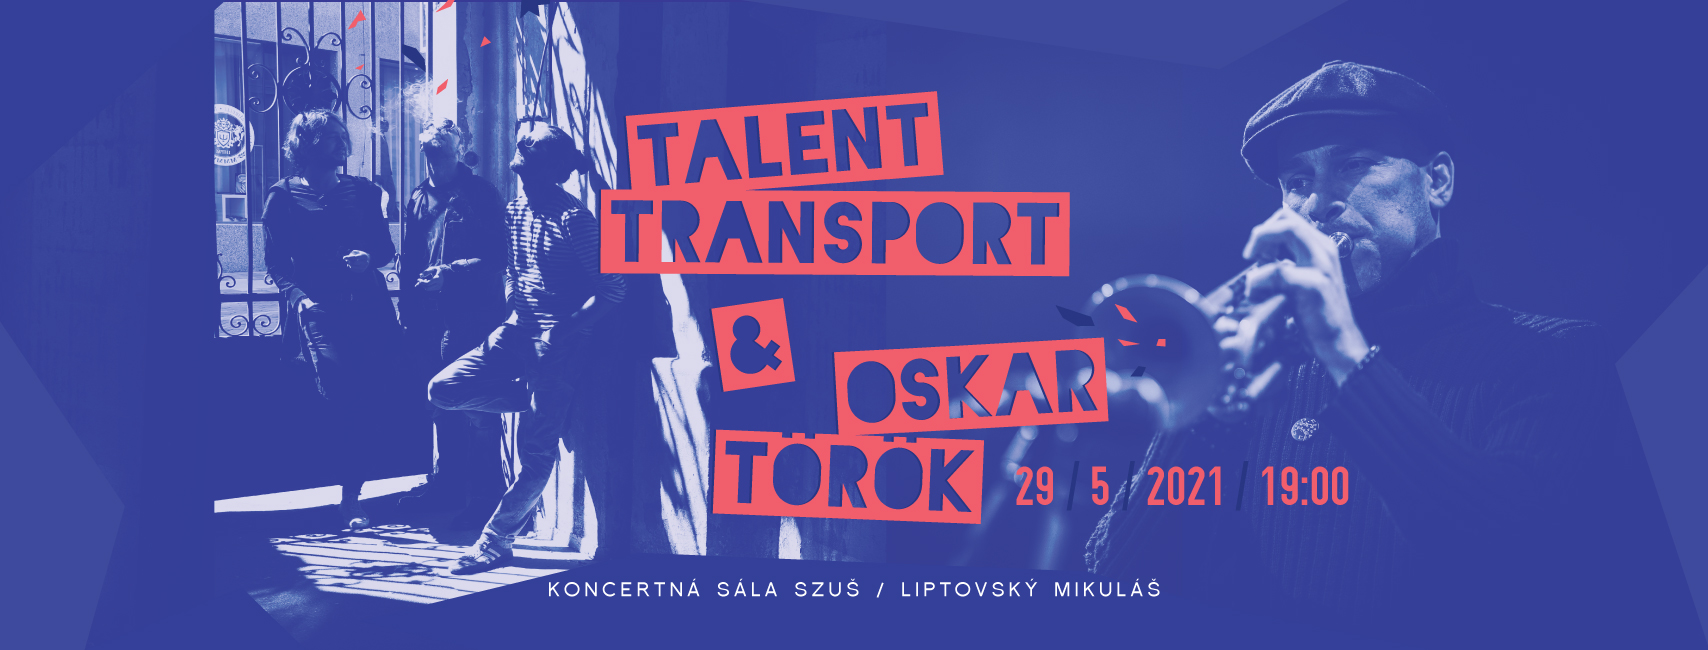 Talent Transport & Oskar Török - podujatie na tickpo-sk